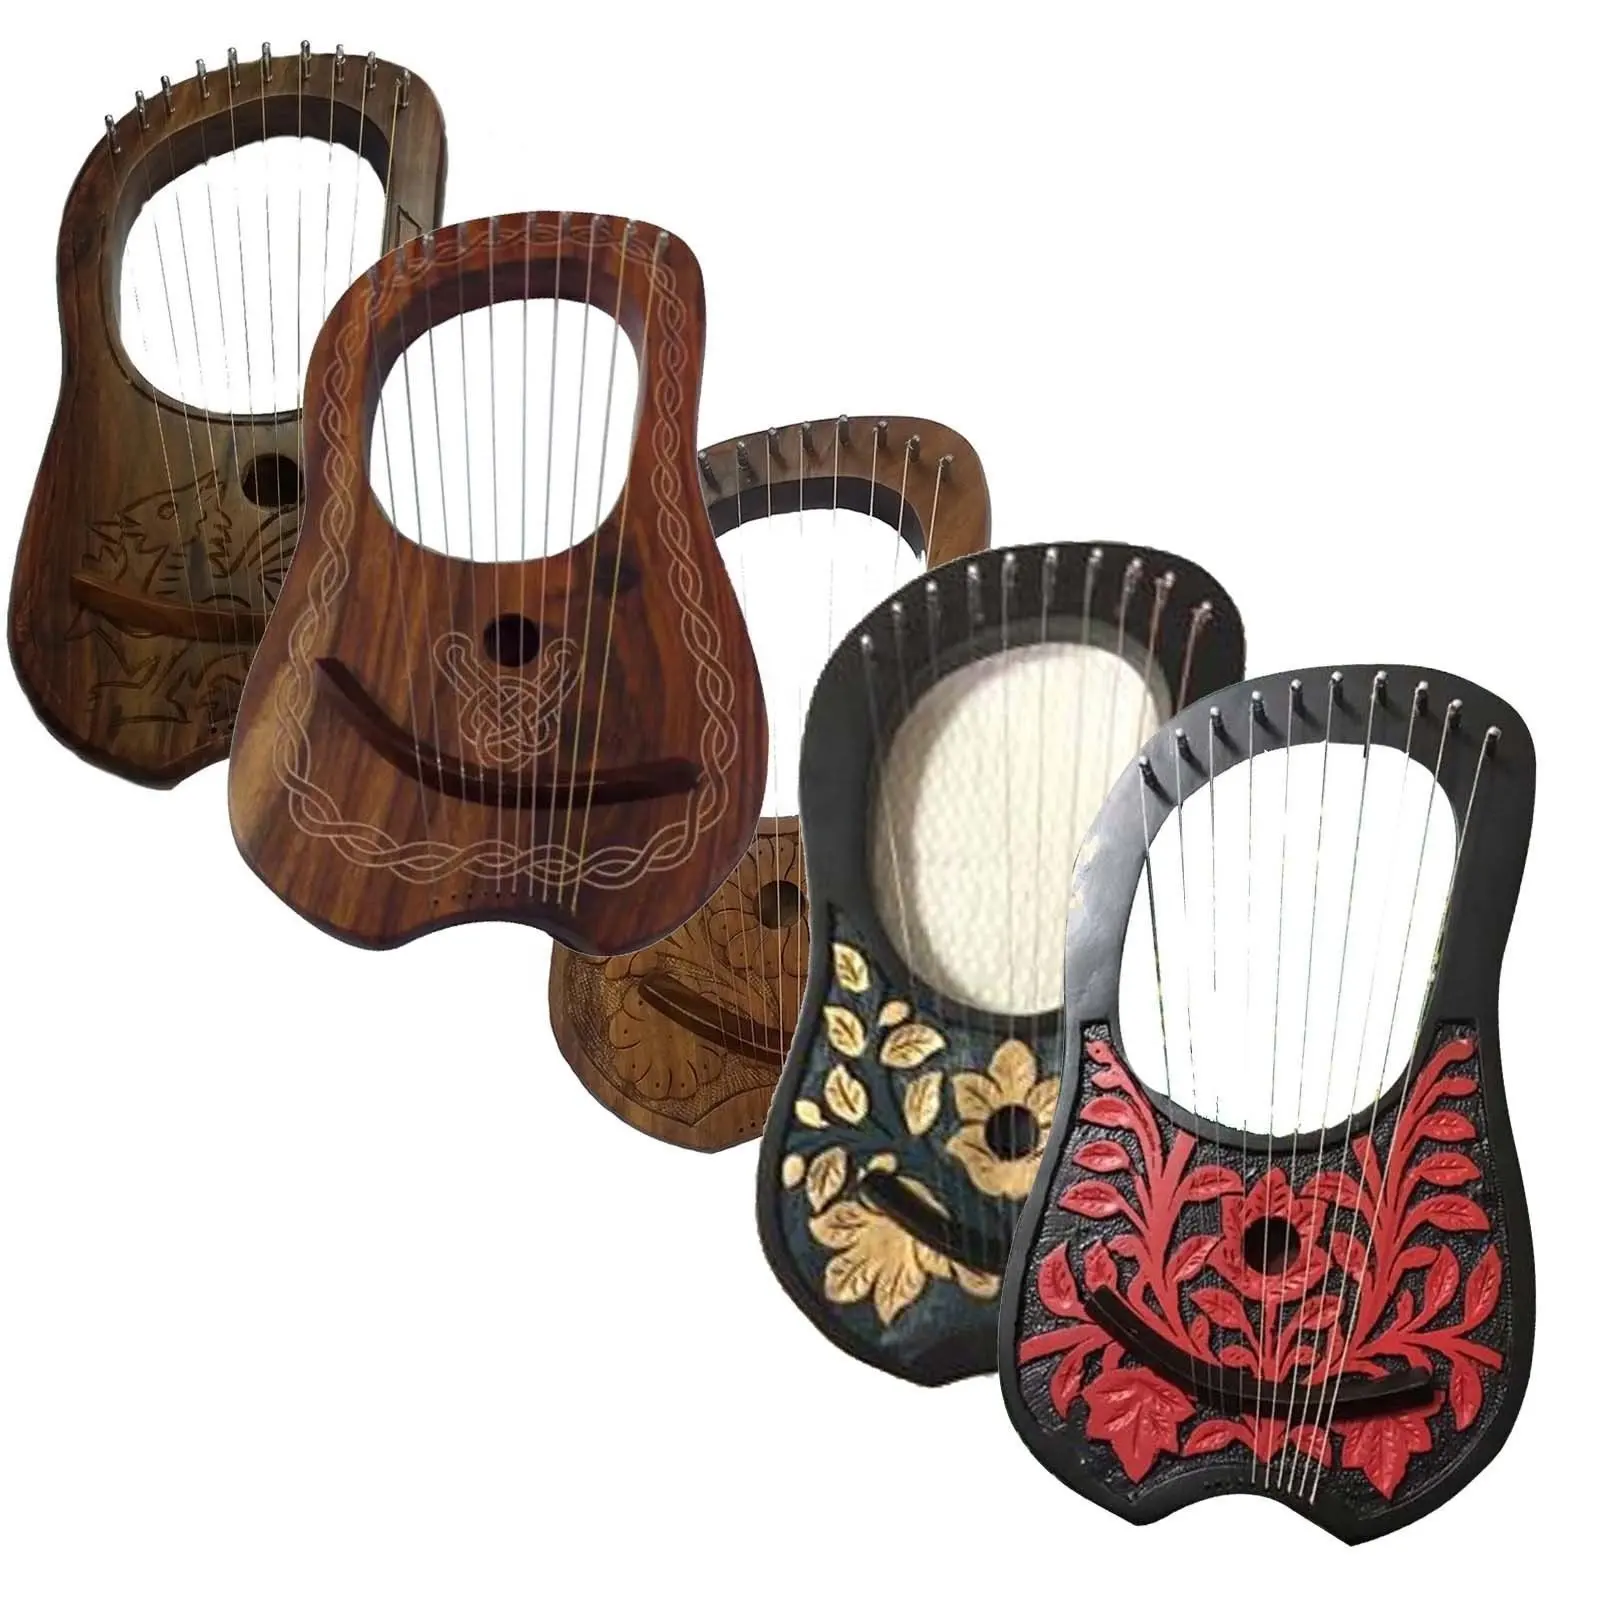 Lyre Harp 10 Metal Strings Plain Design in Brown Bag,Tuning Key,And Strings Set